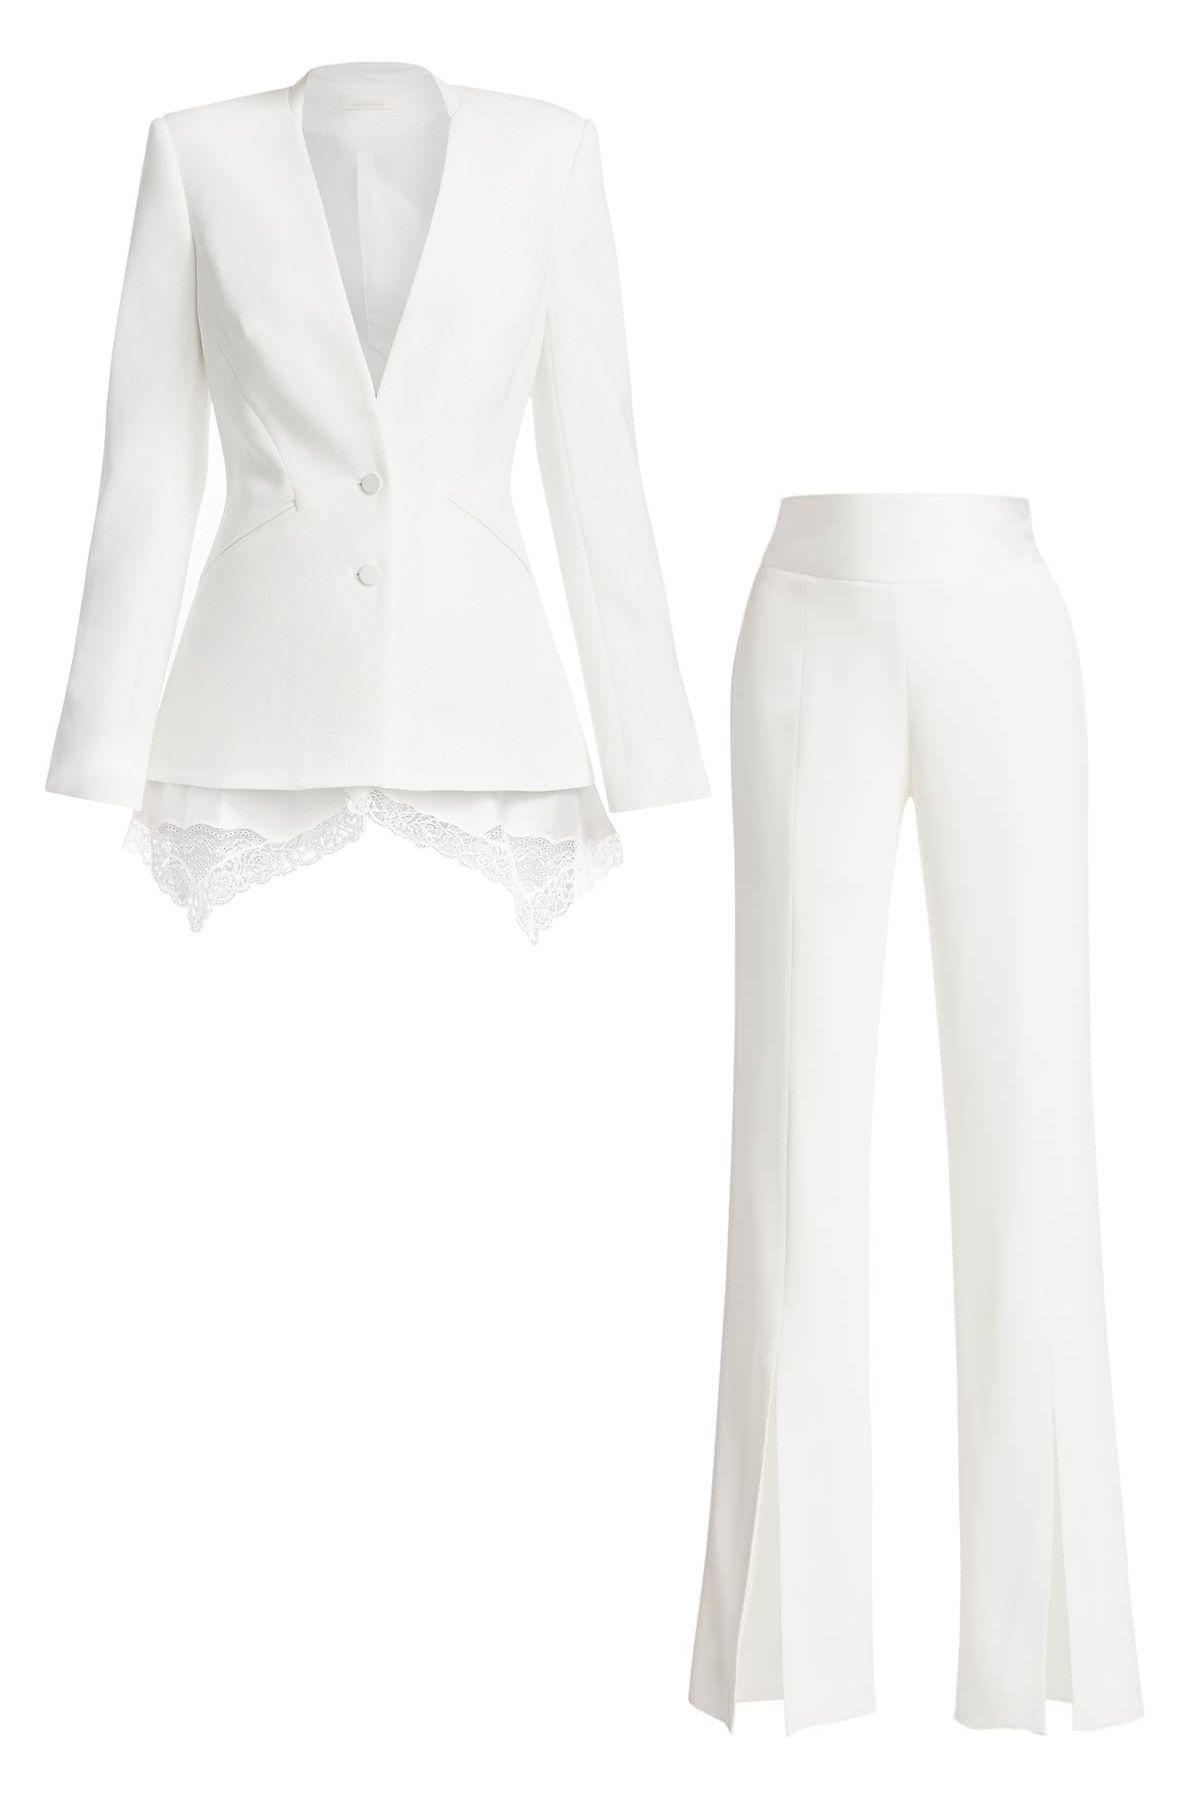 White Women's Office Suits Slim Fit Blazer Trousers Solid Color Ladies Suit  Long Sleeve+Trousers